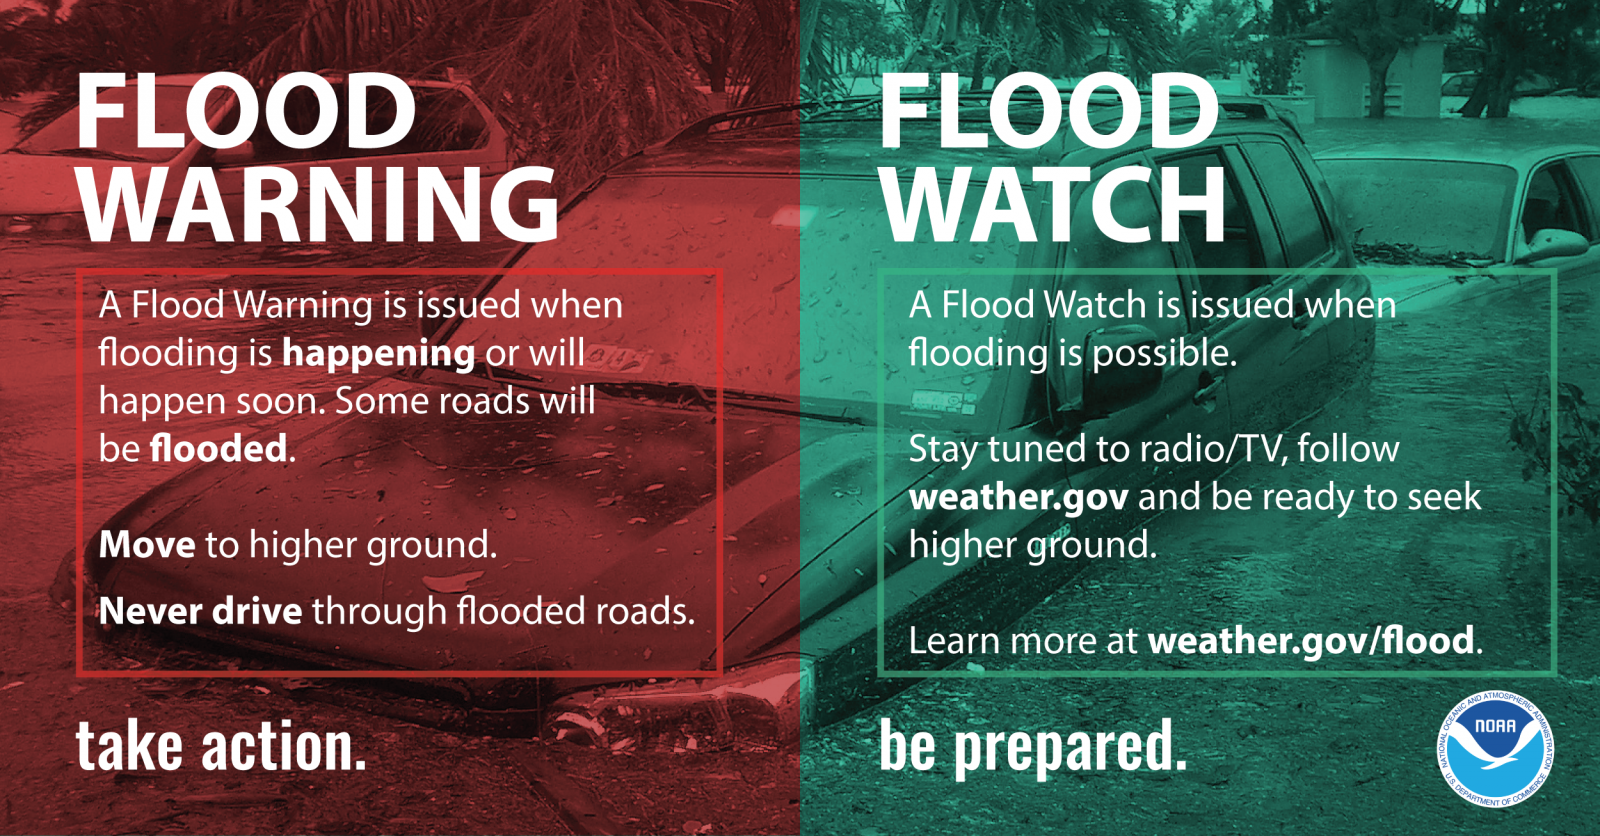 Flood Watch vs. Warning